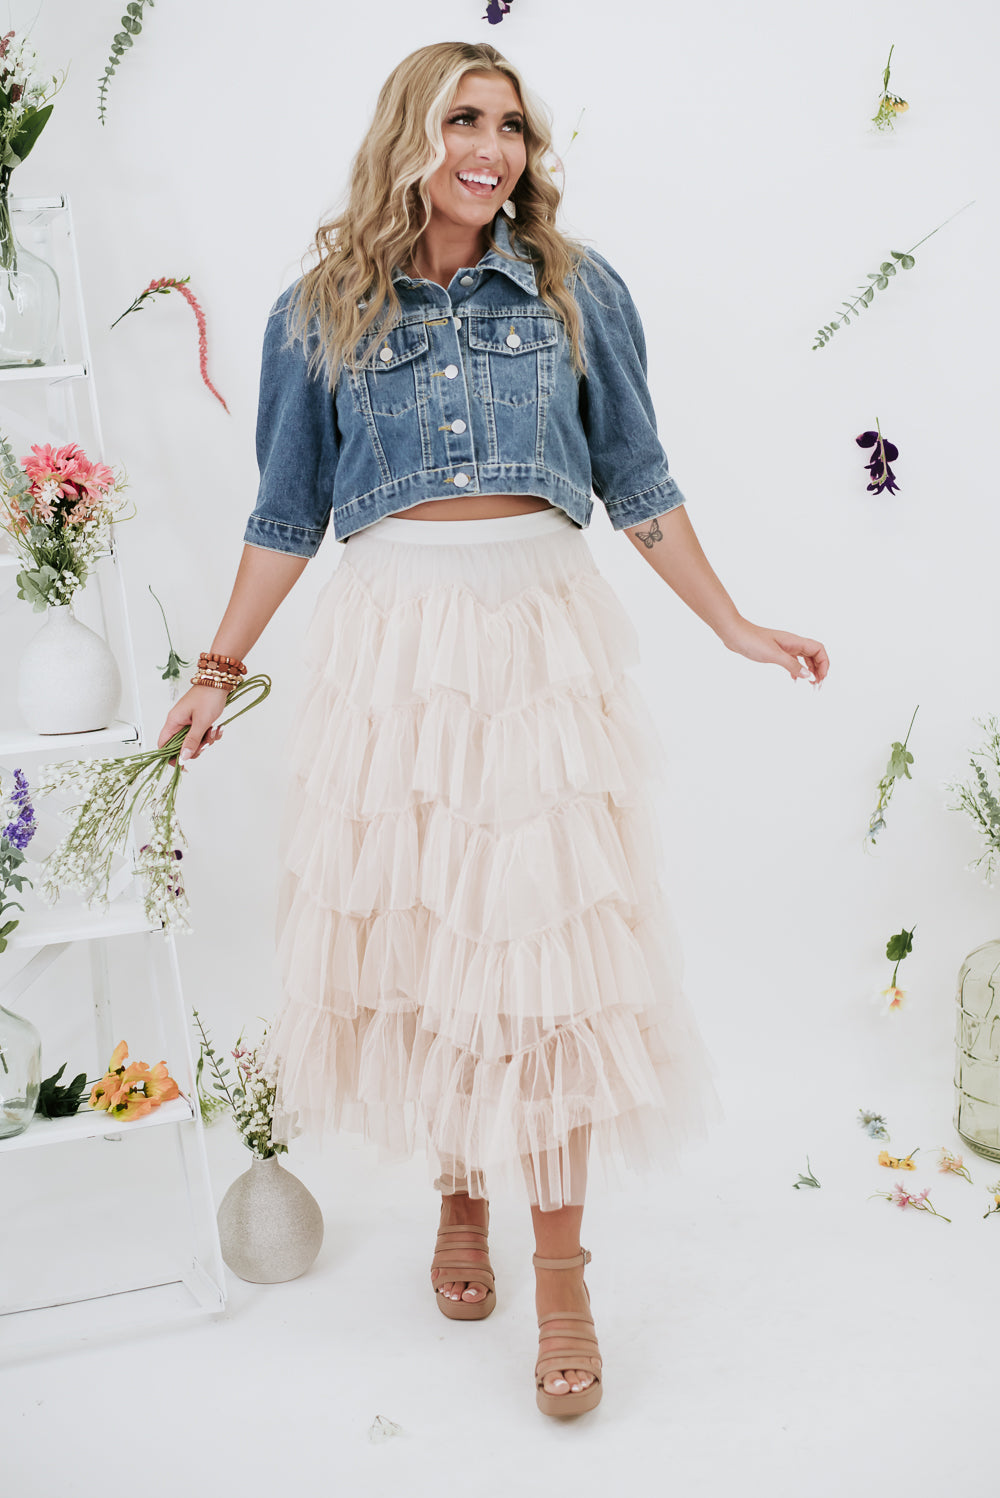 The Best Under $50 Maxi Skirts | Fashion | House of Leo Blog